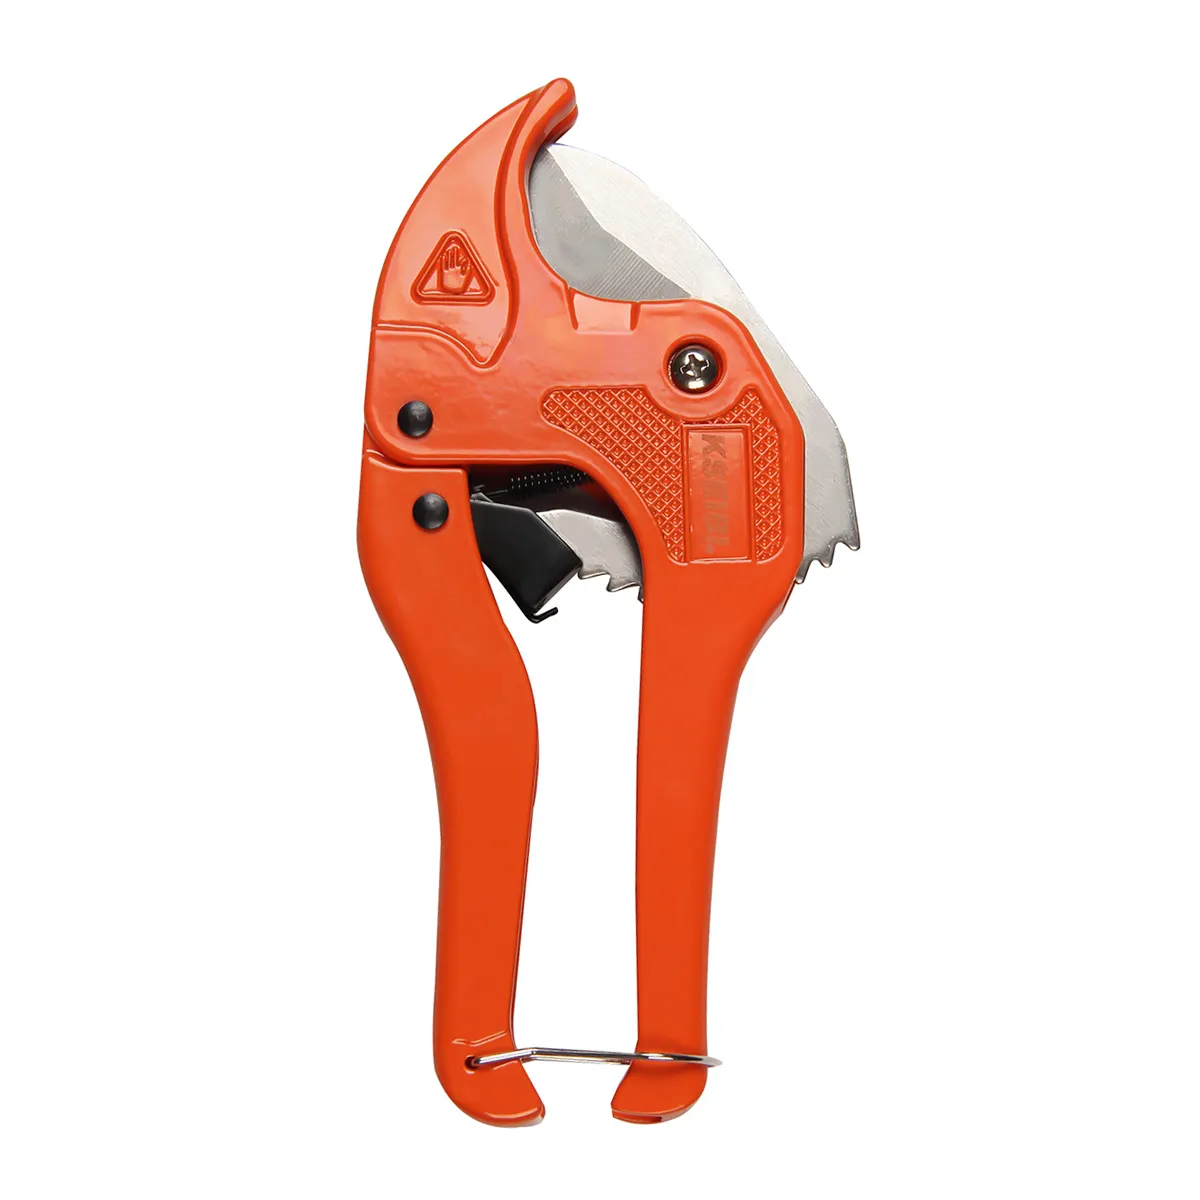 KSEIBI Pvc Pipe Cutter 301-a Locking Plier Automatic